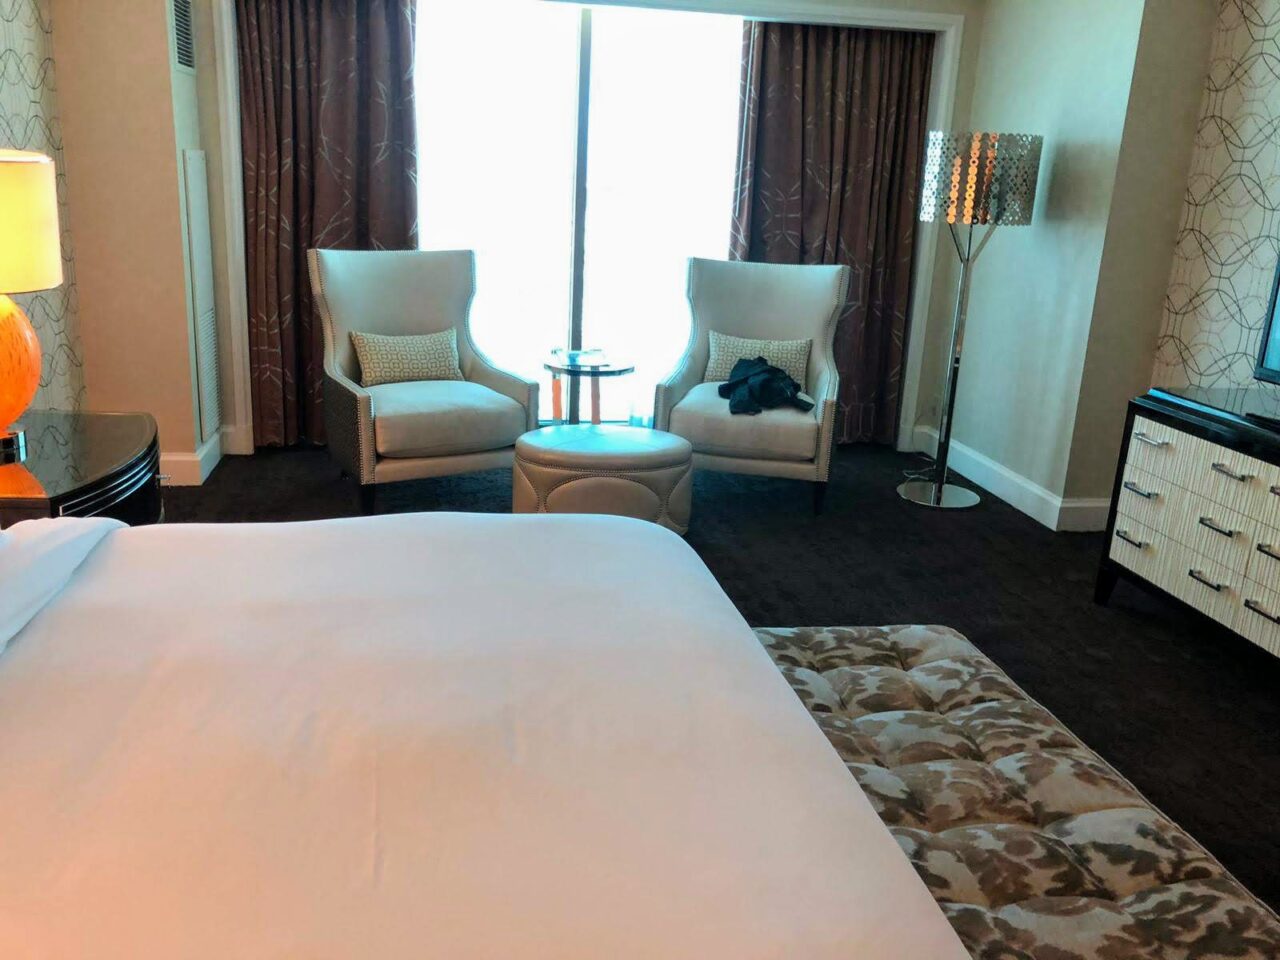 Reopened Mandalay Bay Las Vegas - Resort King Room 